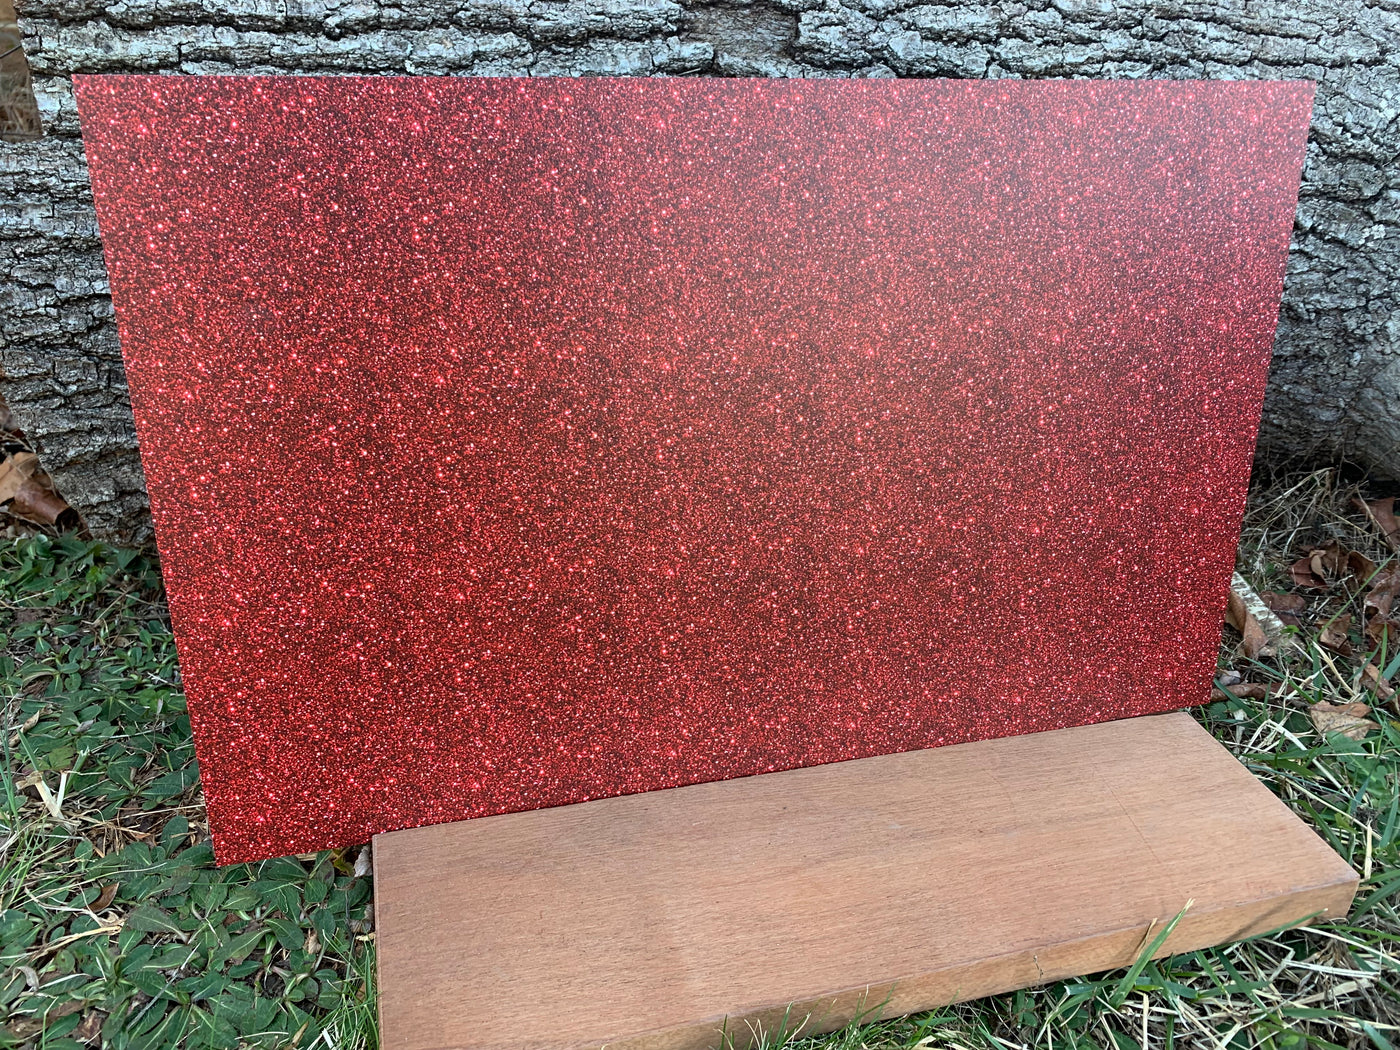 PatternPly® Red Glitter*